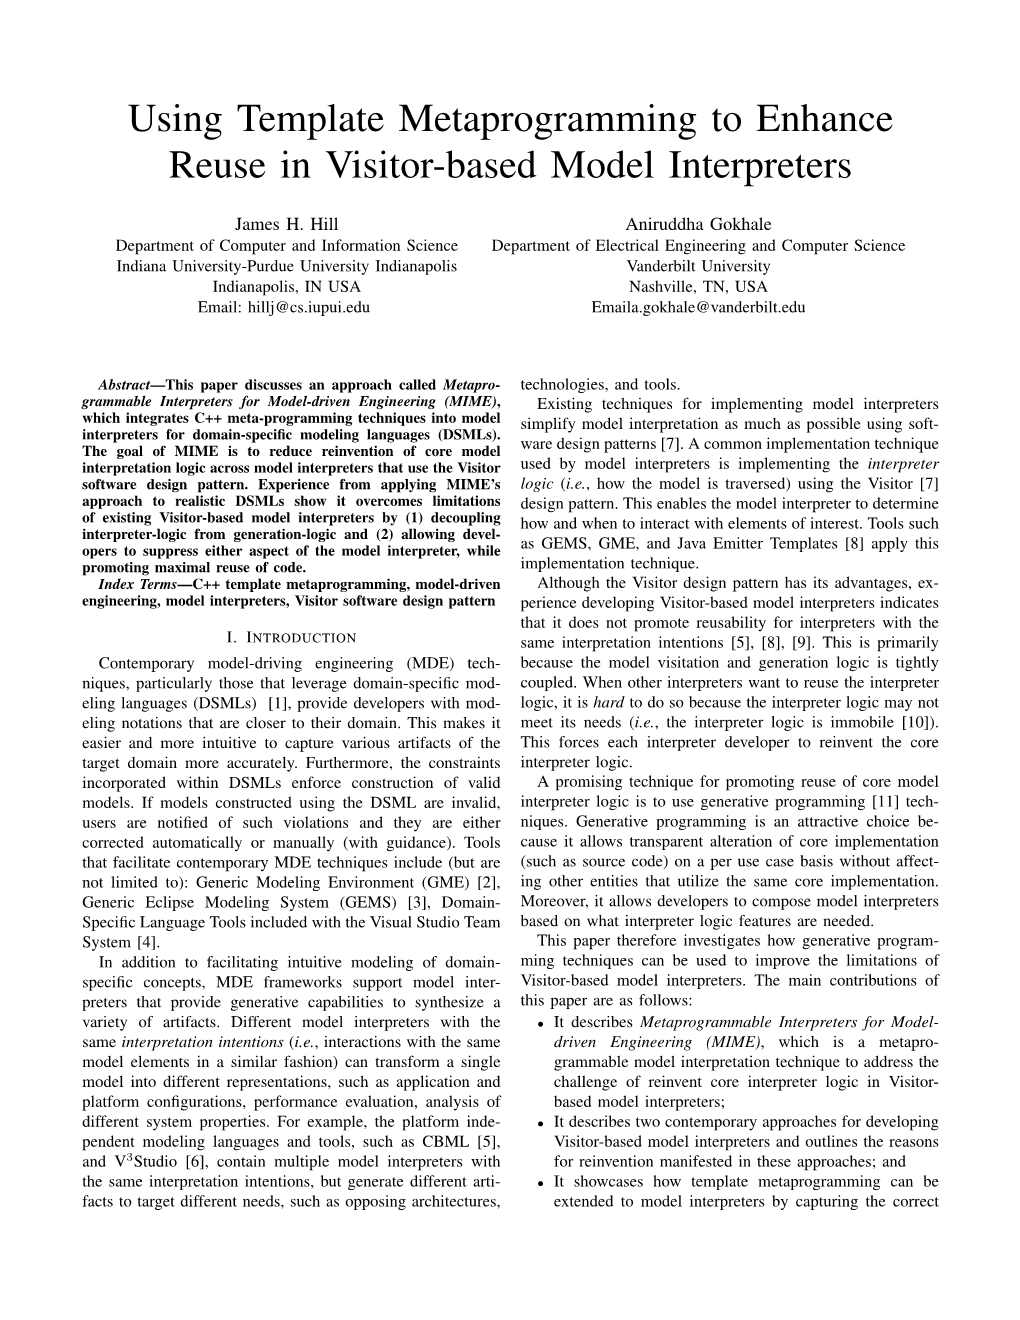 Using Template Metaprogramming to Enhance Reuse in Visitor-Based Model Interpreters